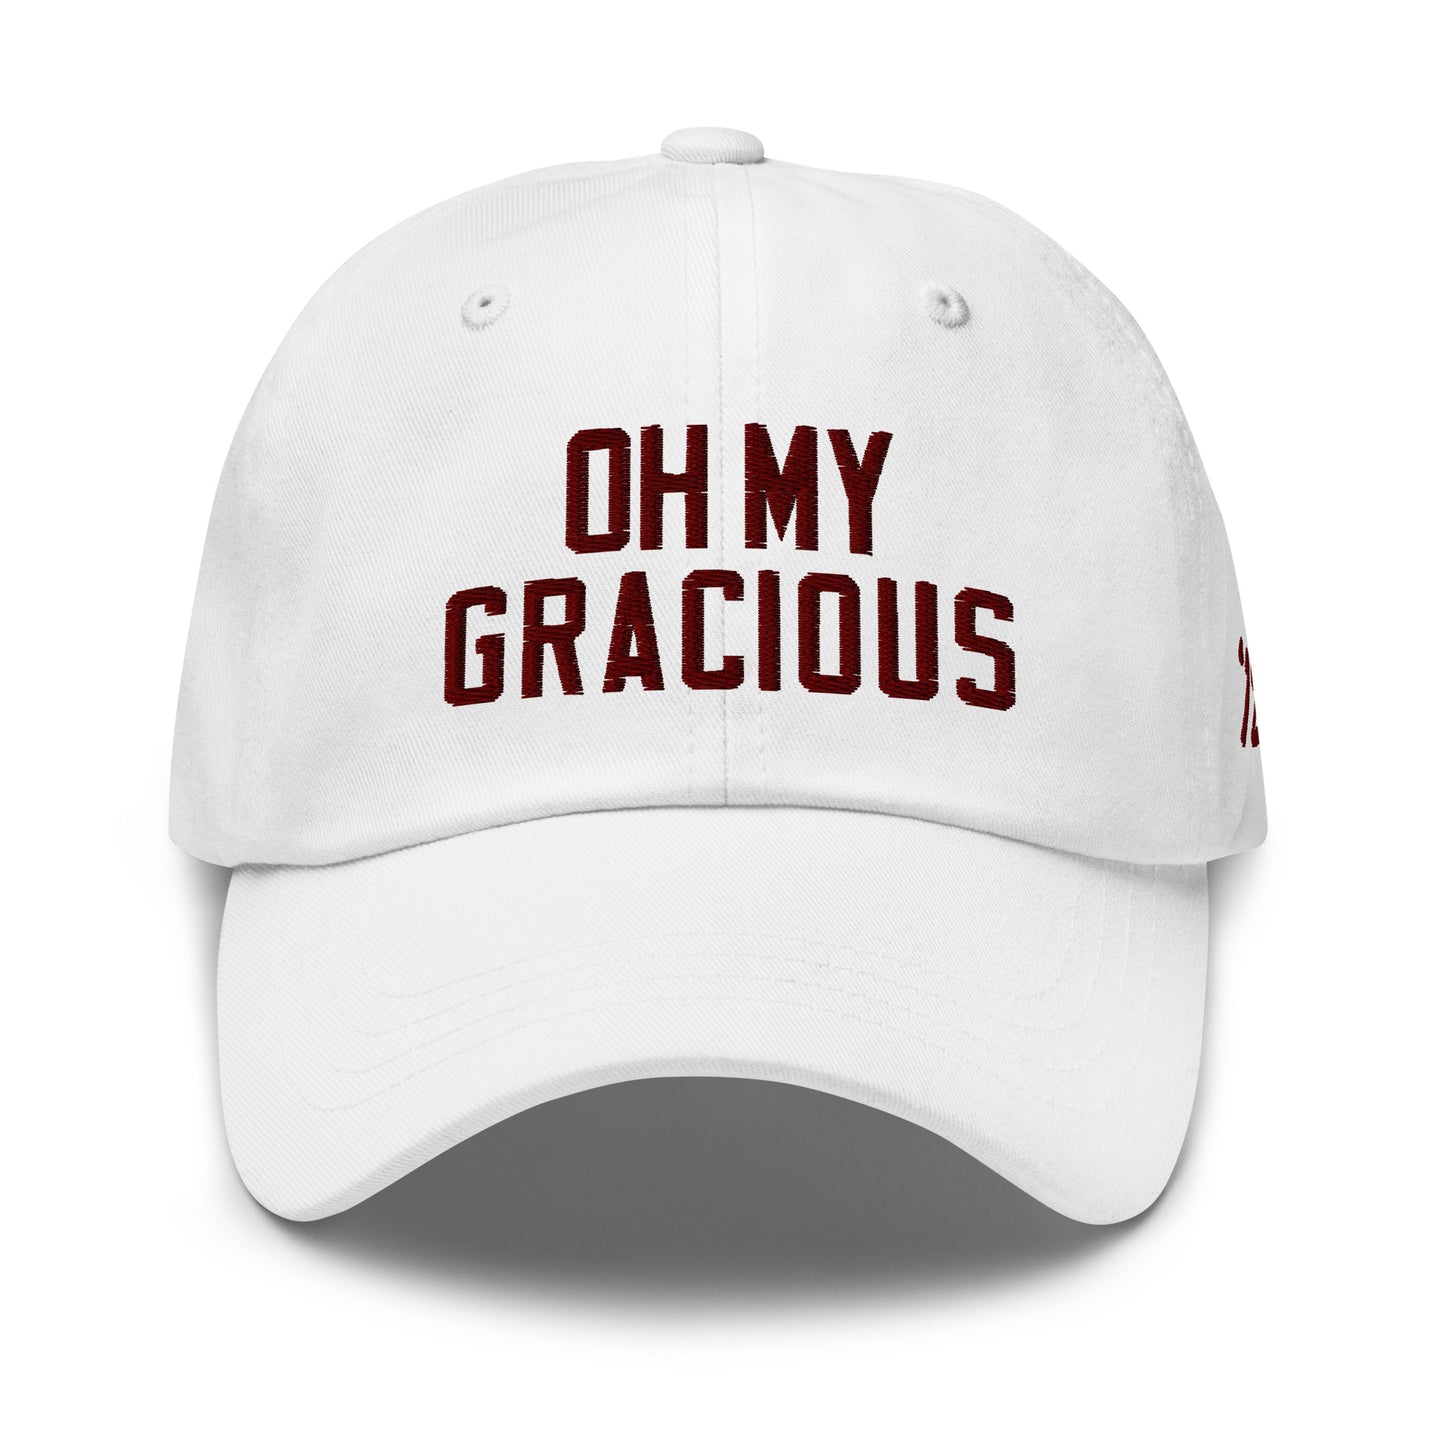 Oh My Gracious - TexasA&M - Dad hat